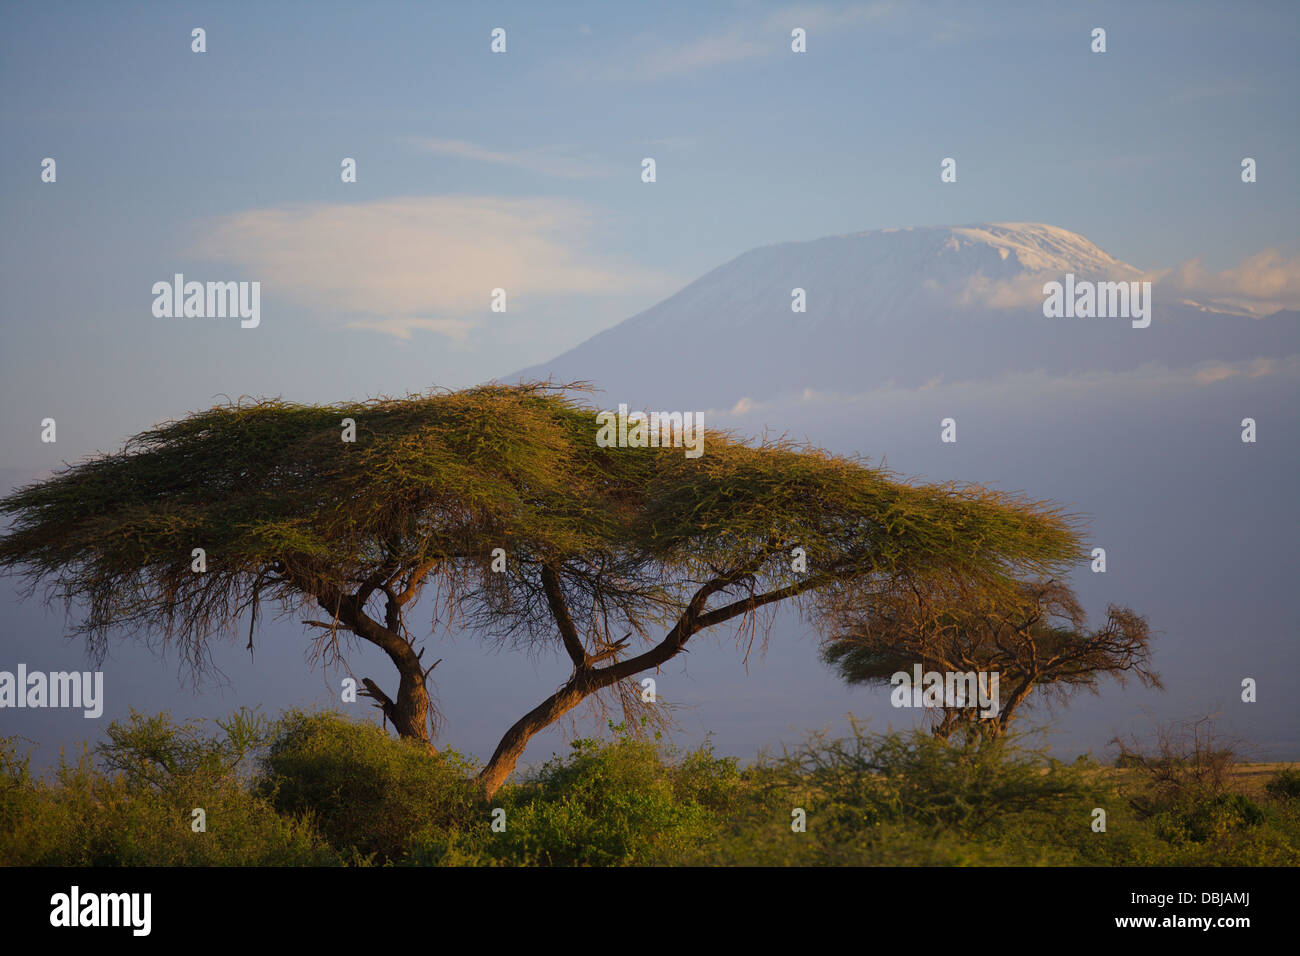 Acacia Trees in front of Mt. Kilimanjaro. Amboselli Park, Kenya Africa. Stock Photo